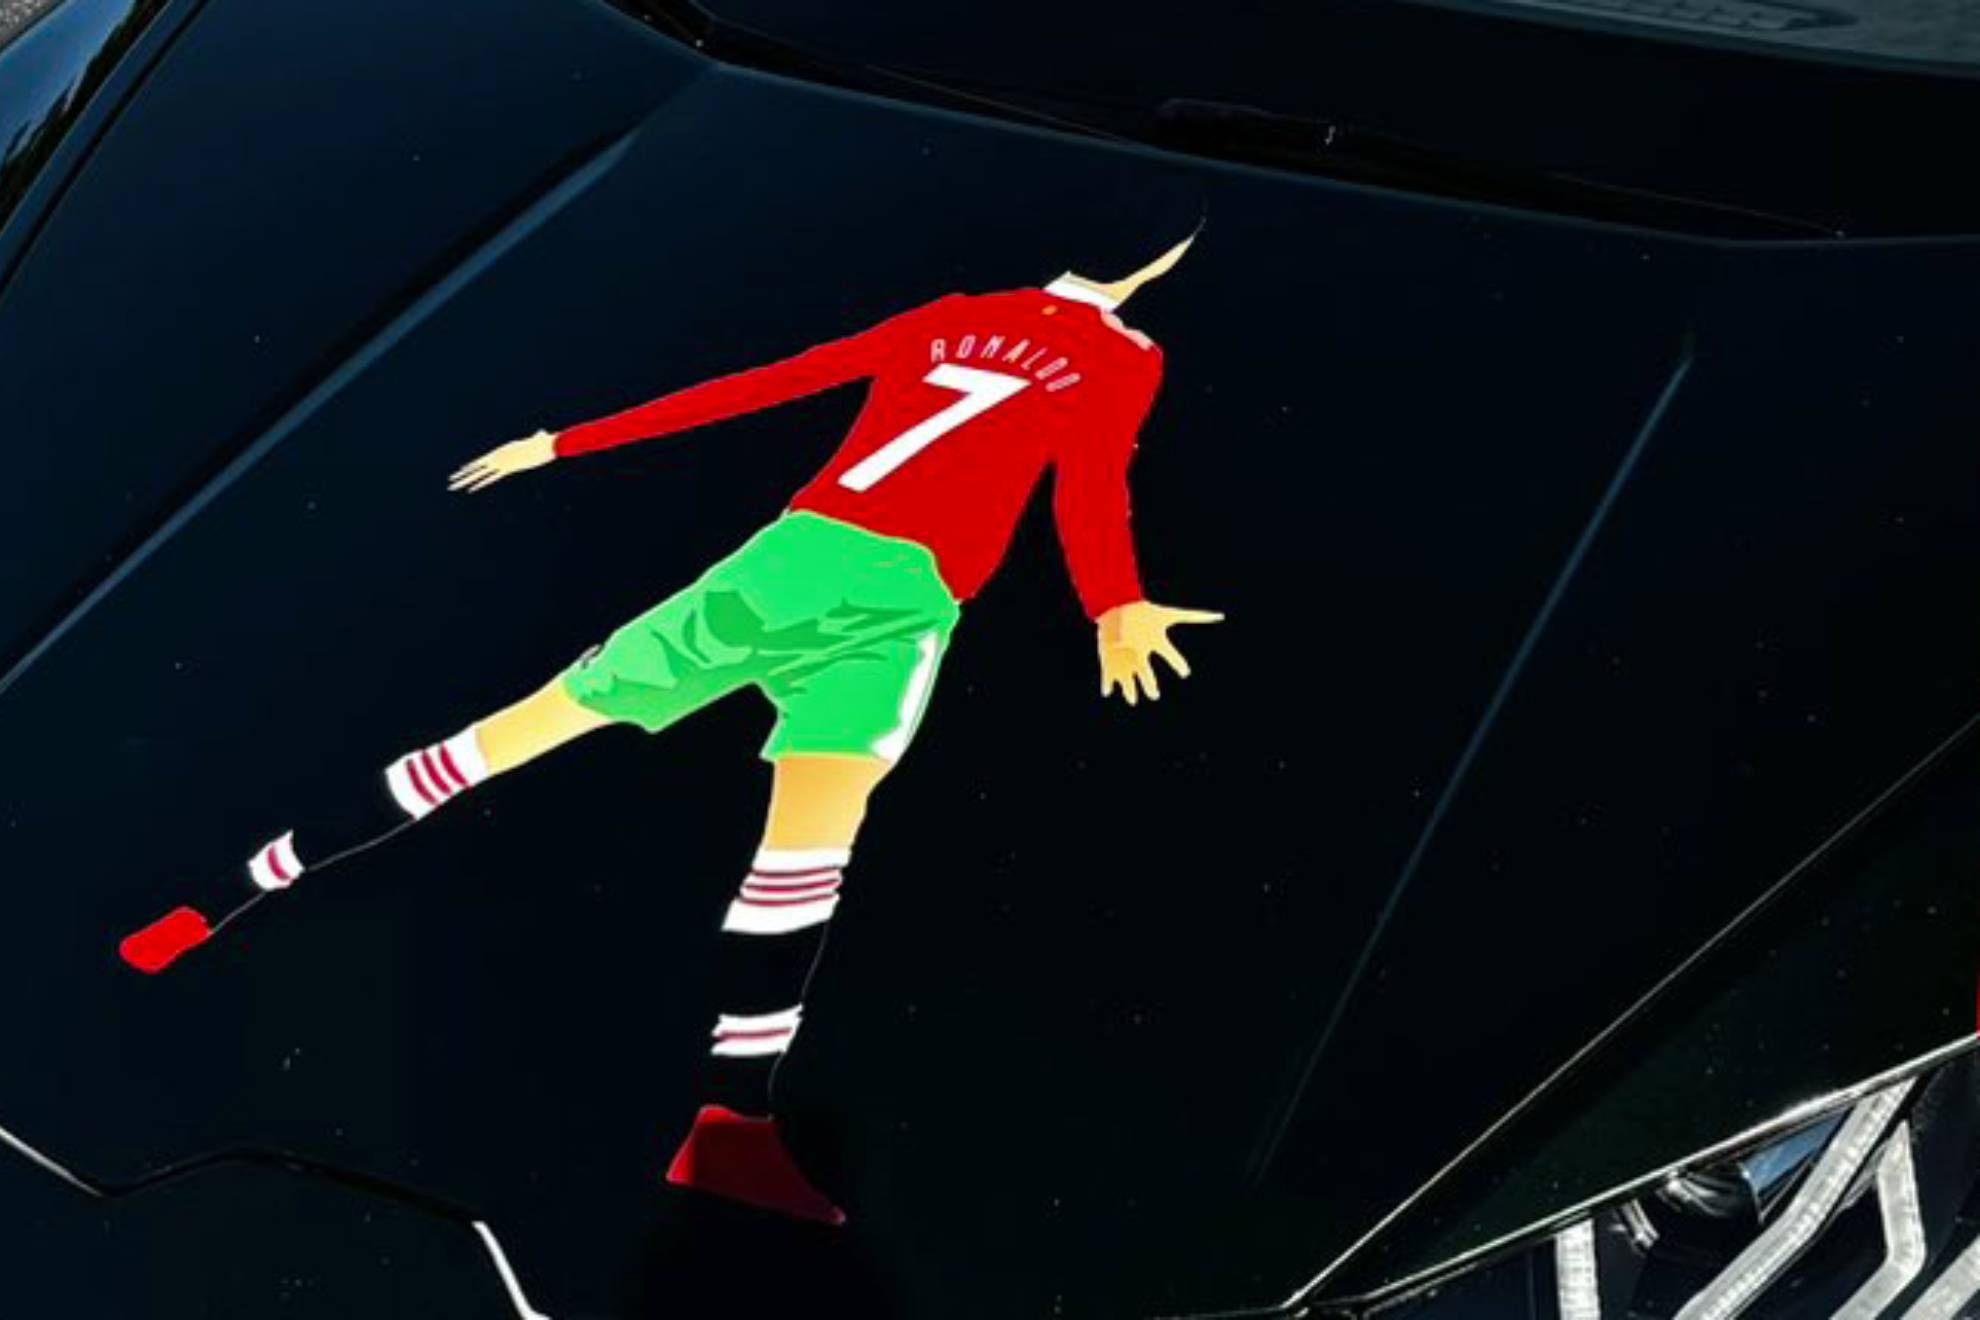 The Cristiano Ronaldo detail on IShowSpeeds car